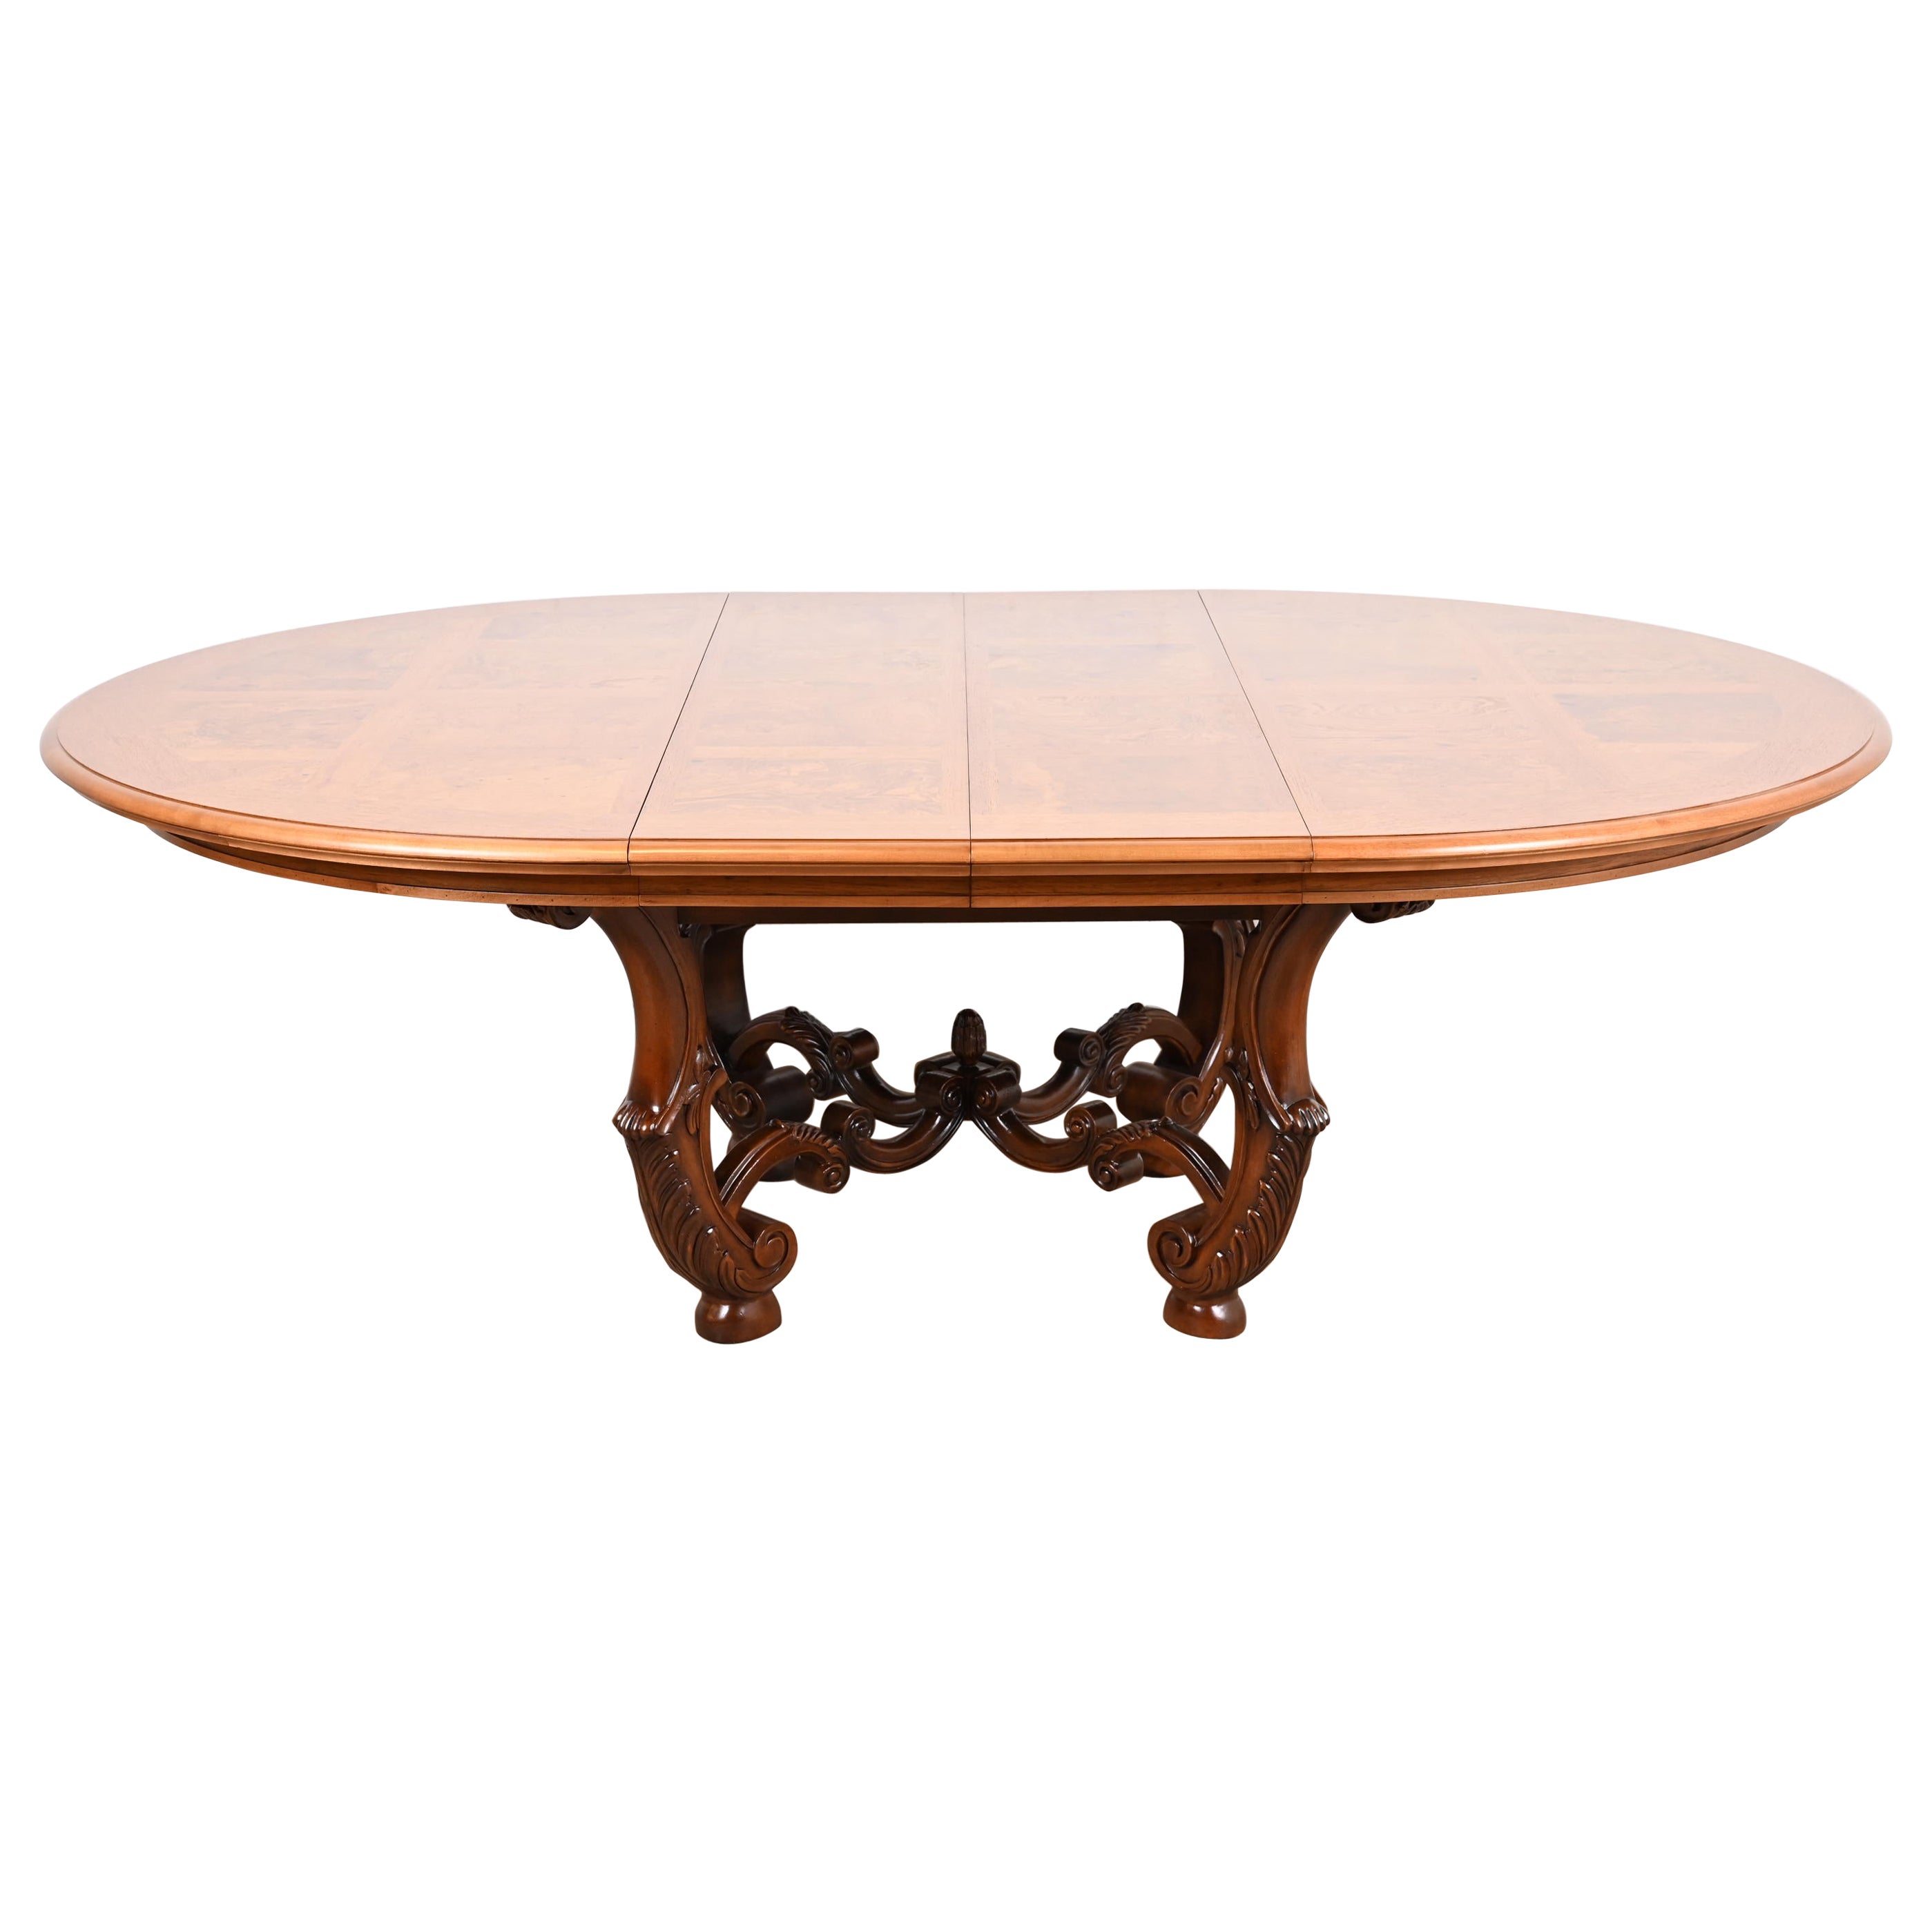 Henredon Italian Provincial Carved Walnut and Burl Wood Pedestal Dining Table